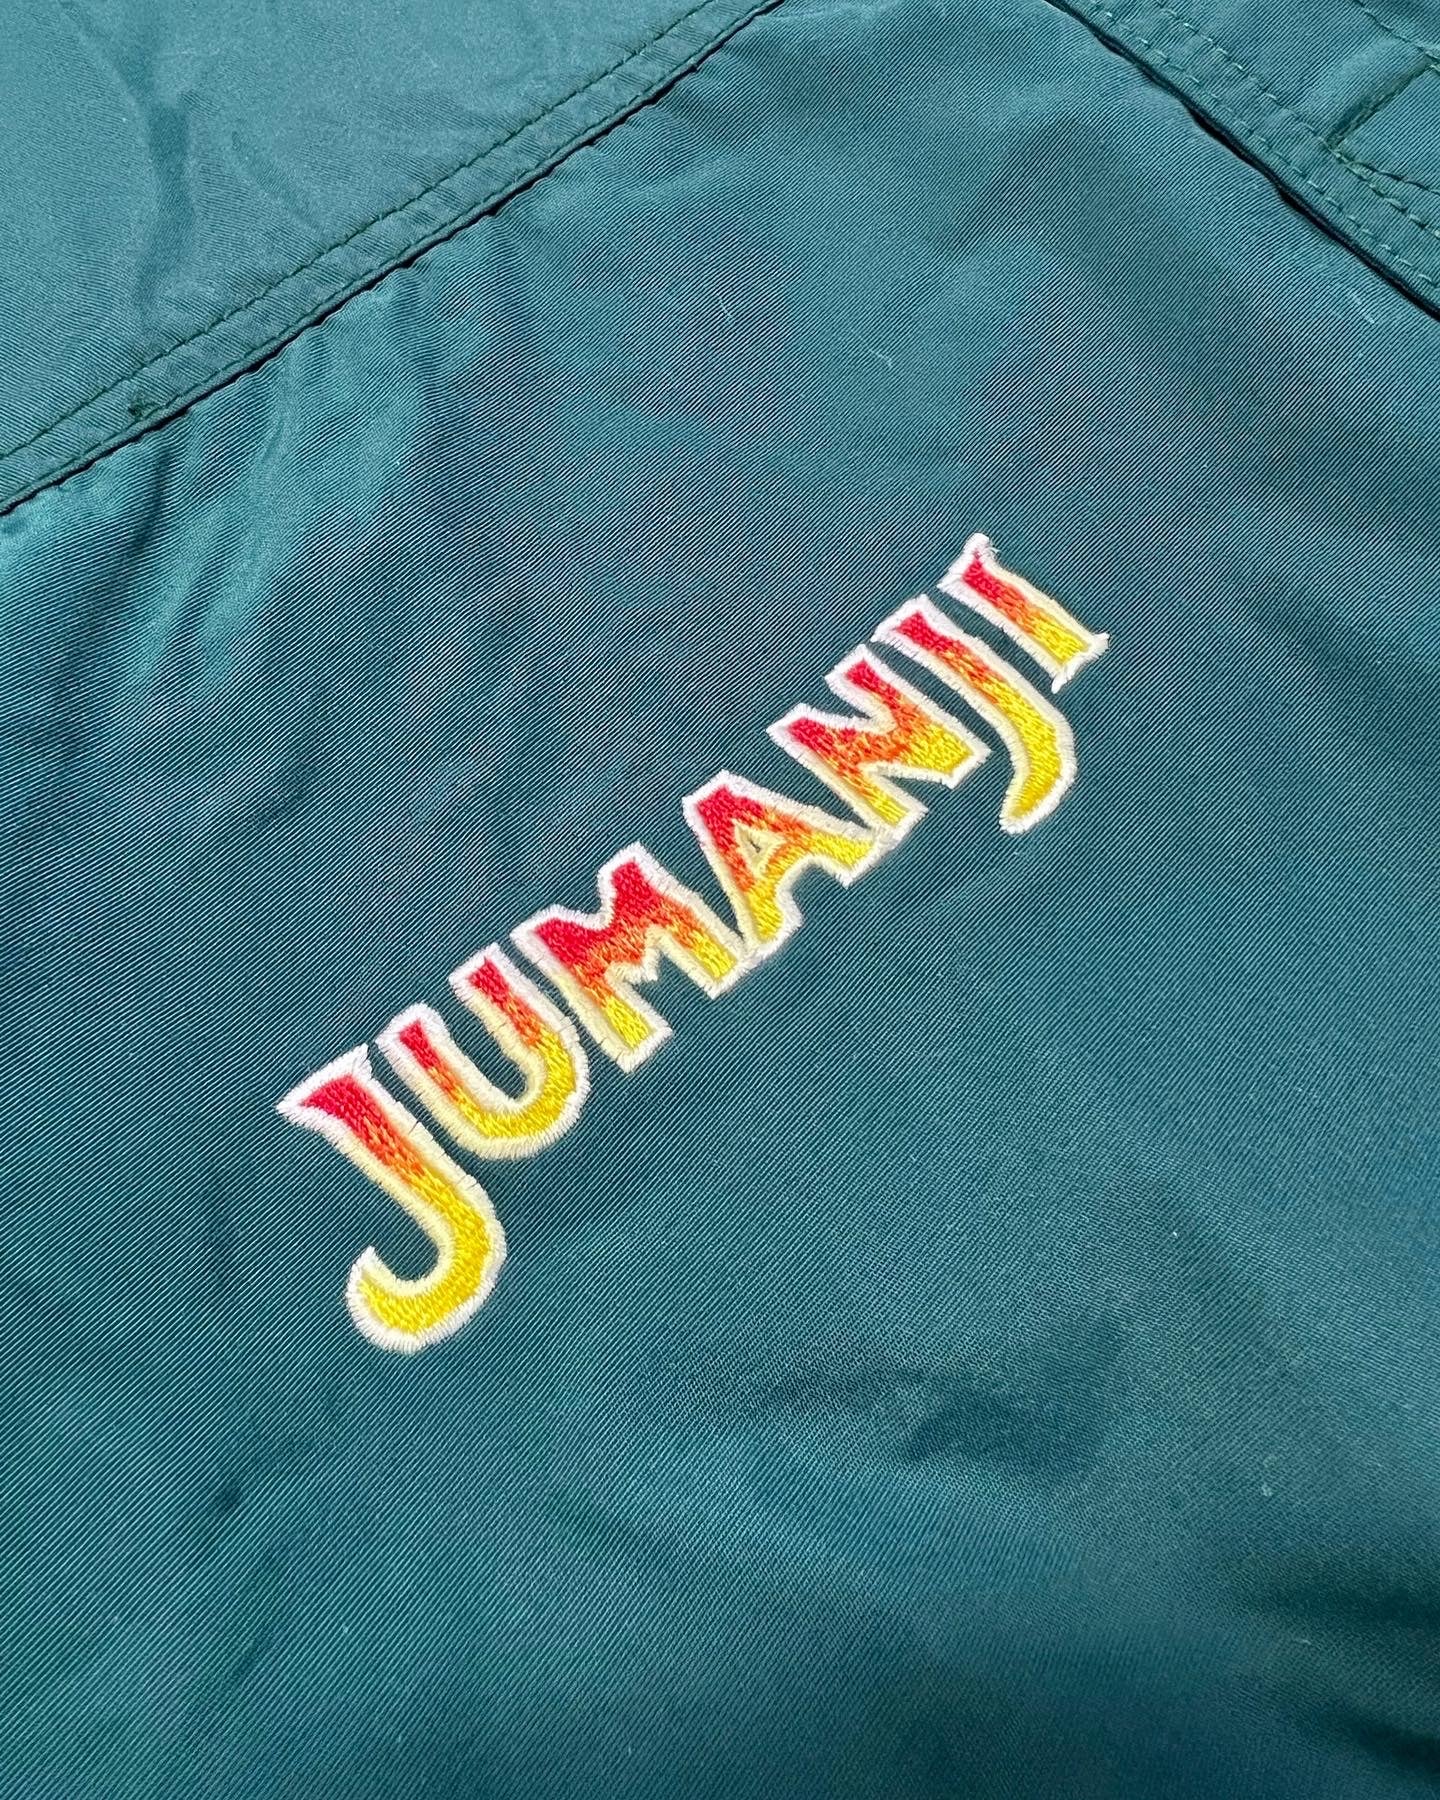 1995 Nike ACG “Jumanji” Promotional & Crew Line – In search of